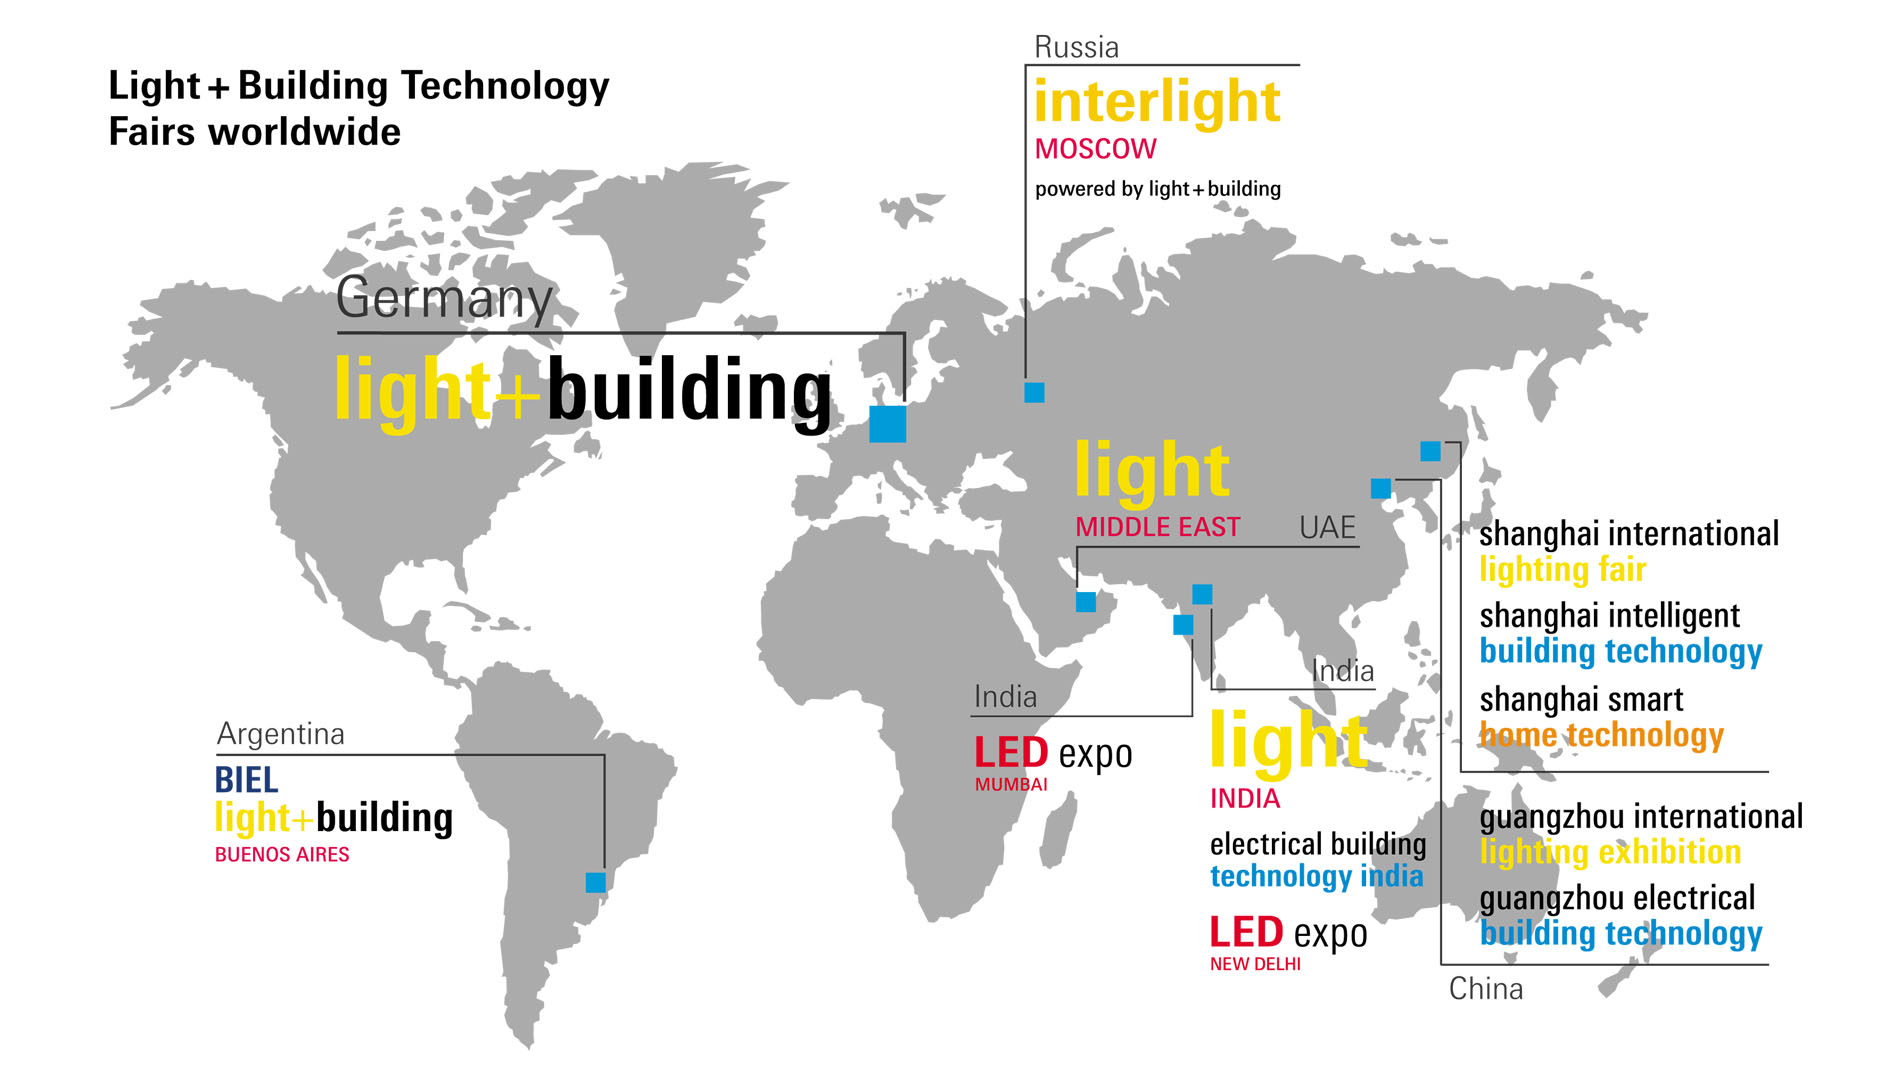 Light + Building Technology Fairs en el mundo